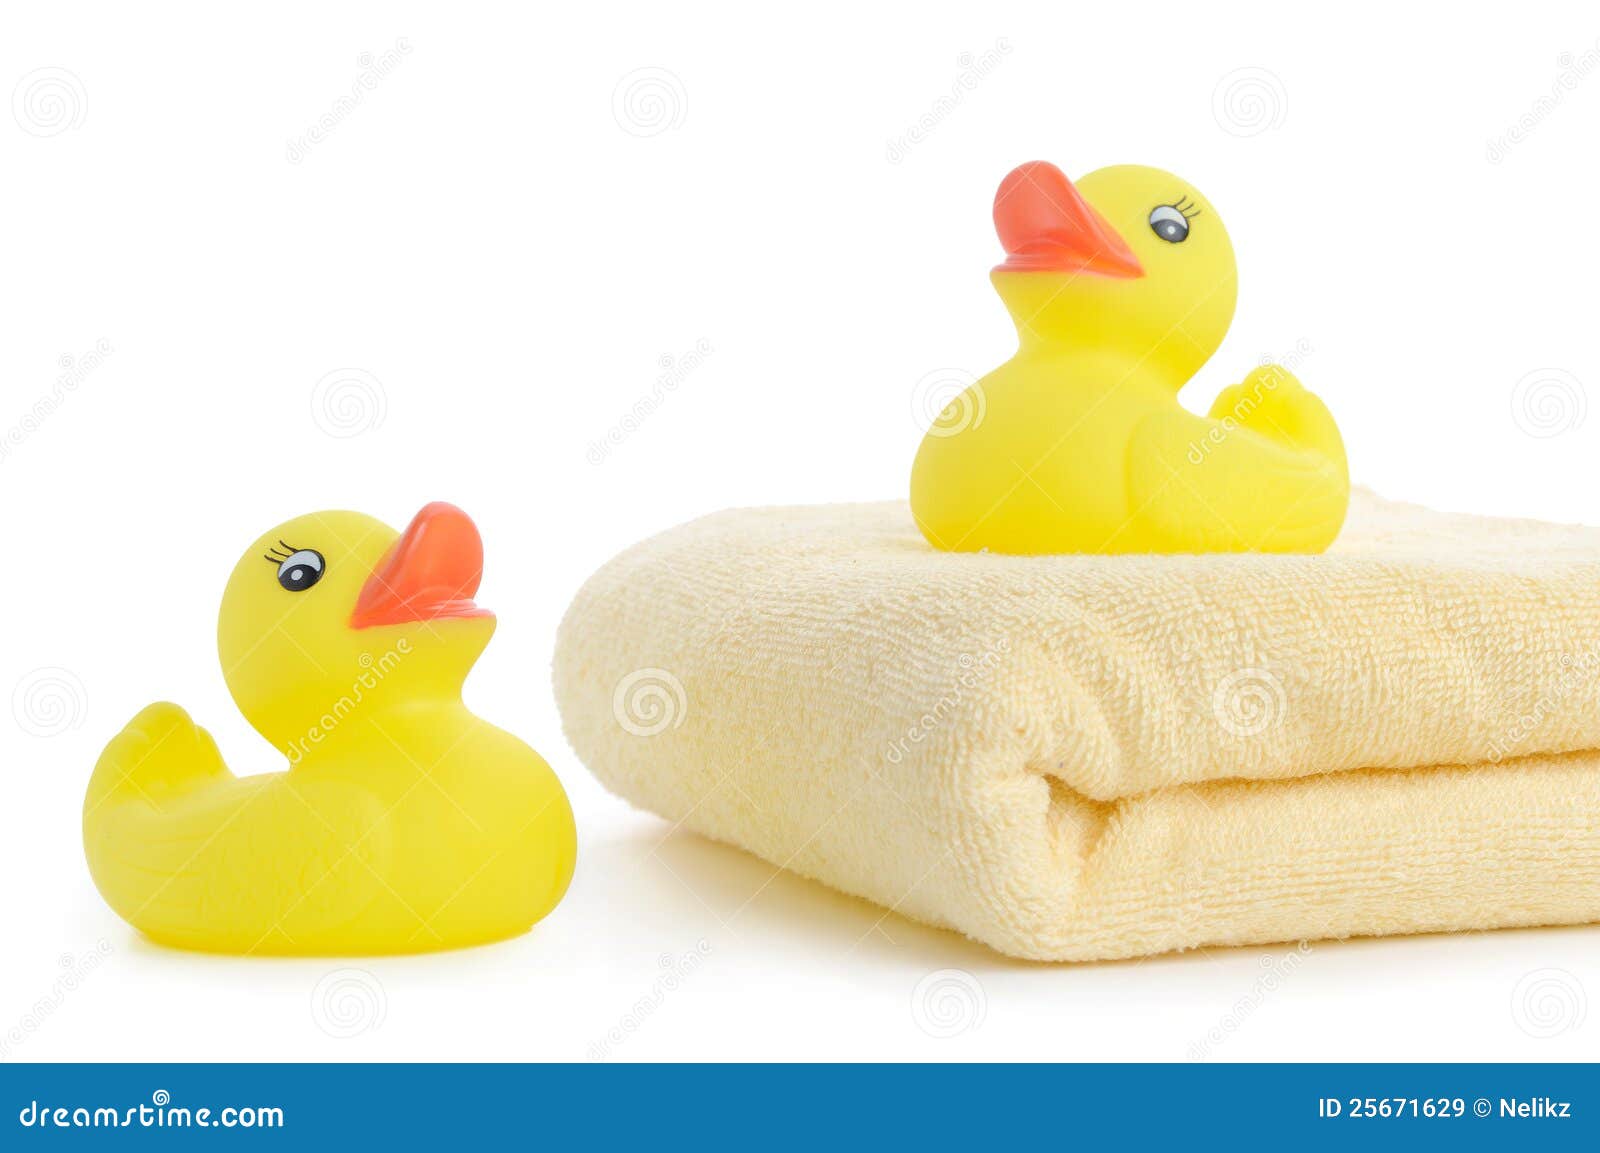 https://thumbs.dreamstime.com/z/bath-towels-yellow-rubber-duckies-25671629.jpg